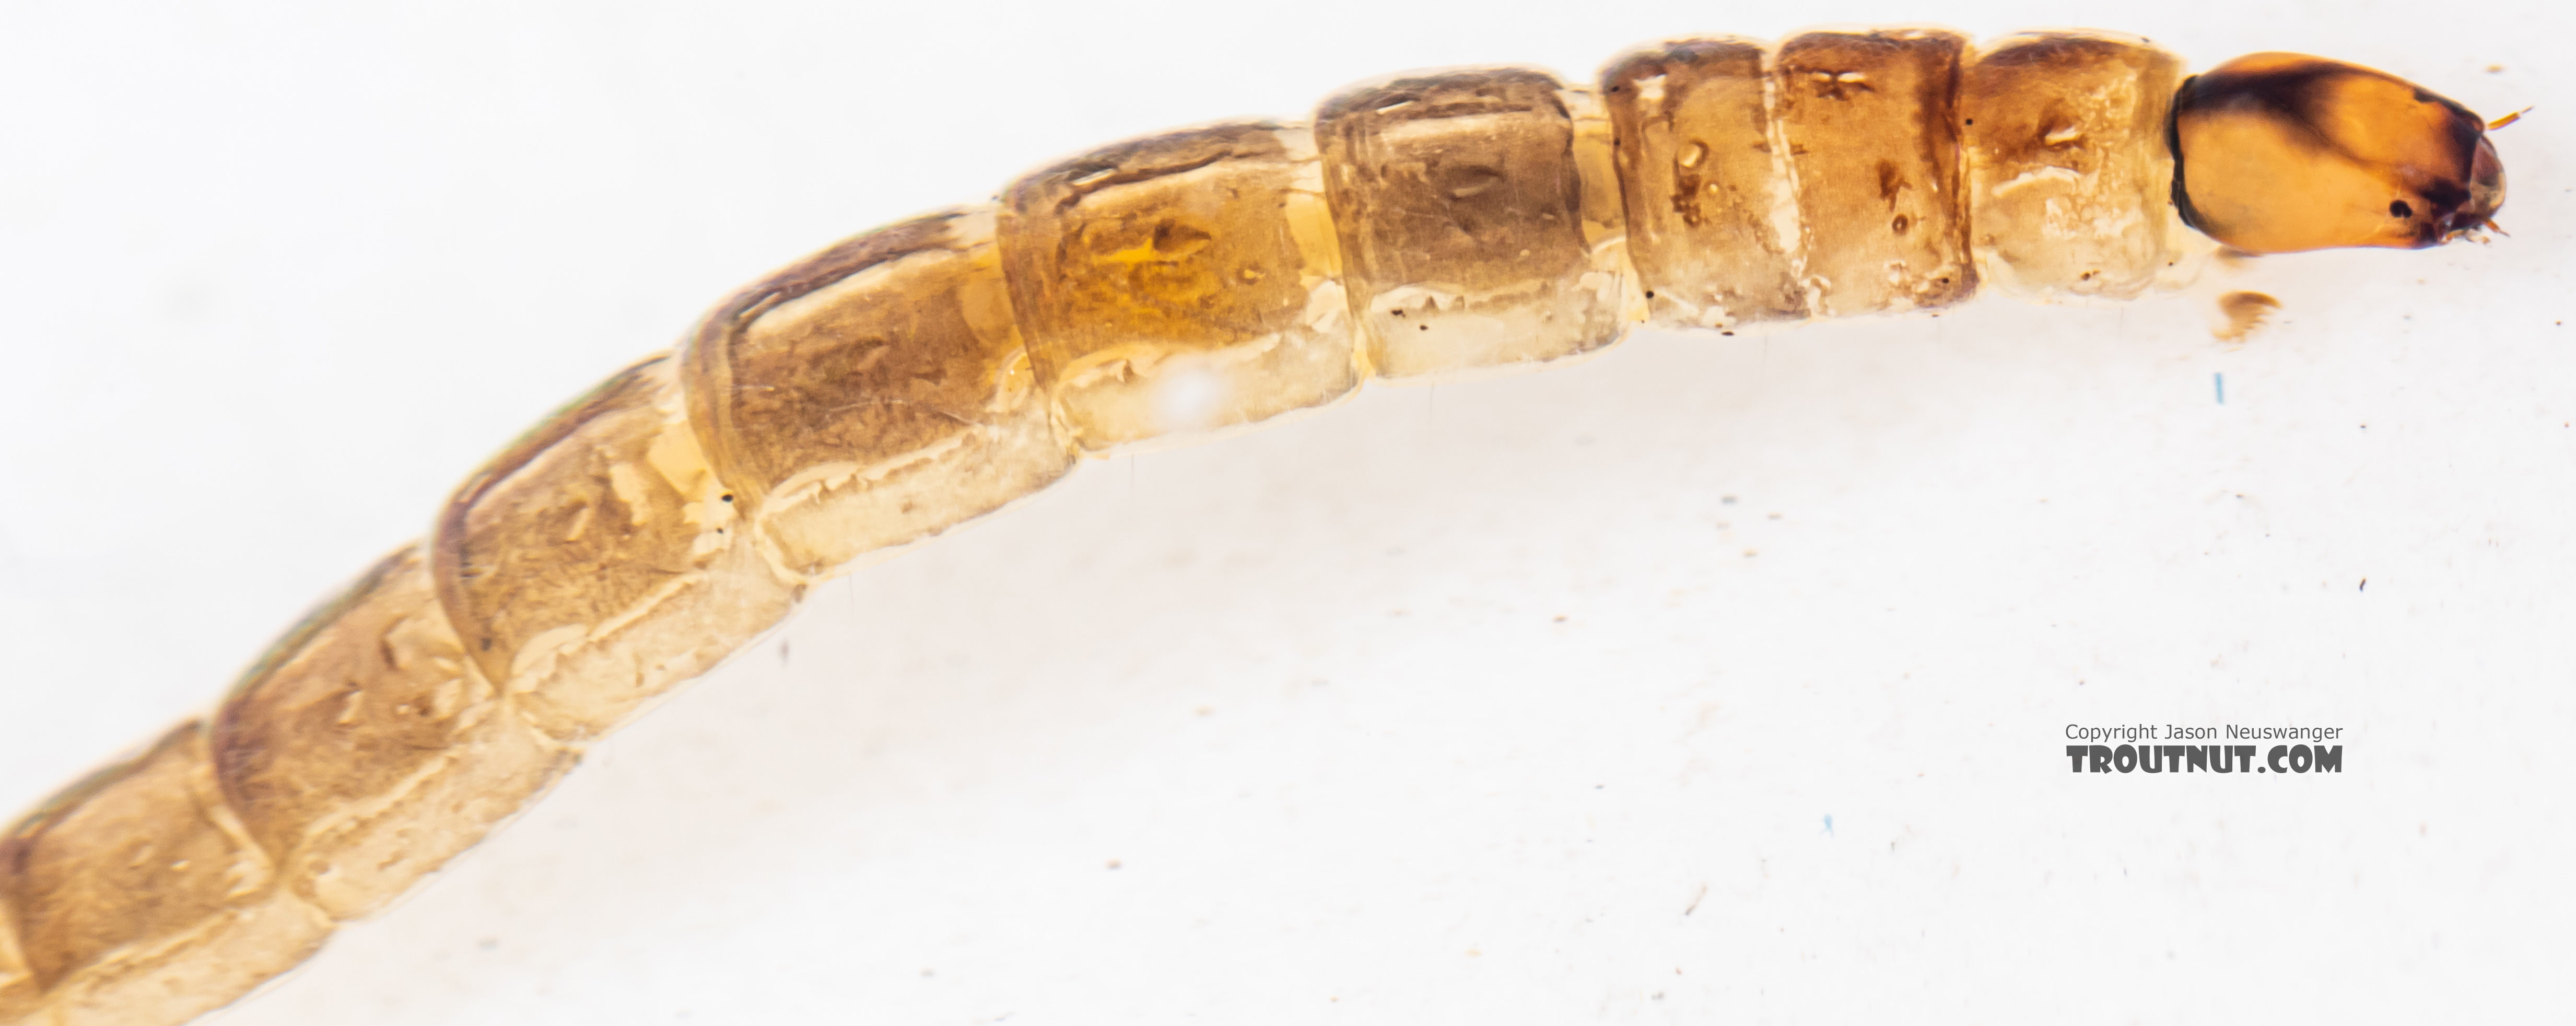 Chironomidae (Midges) Midge Larva from Mystery Creek #199 in Washington